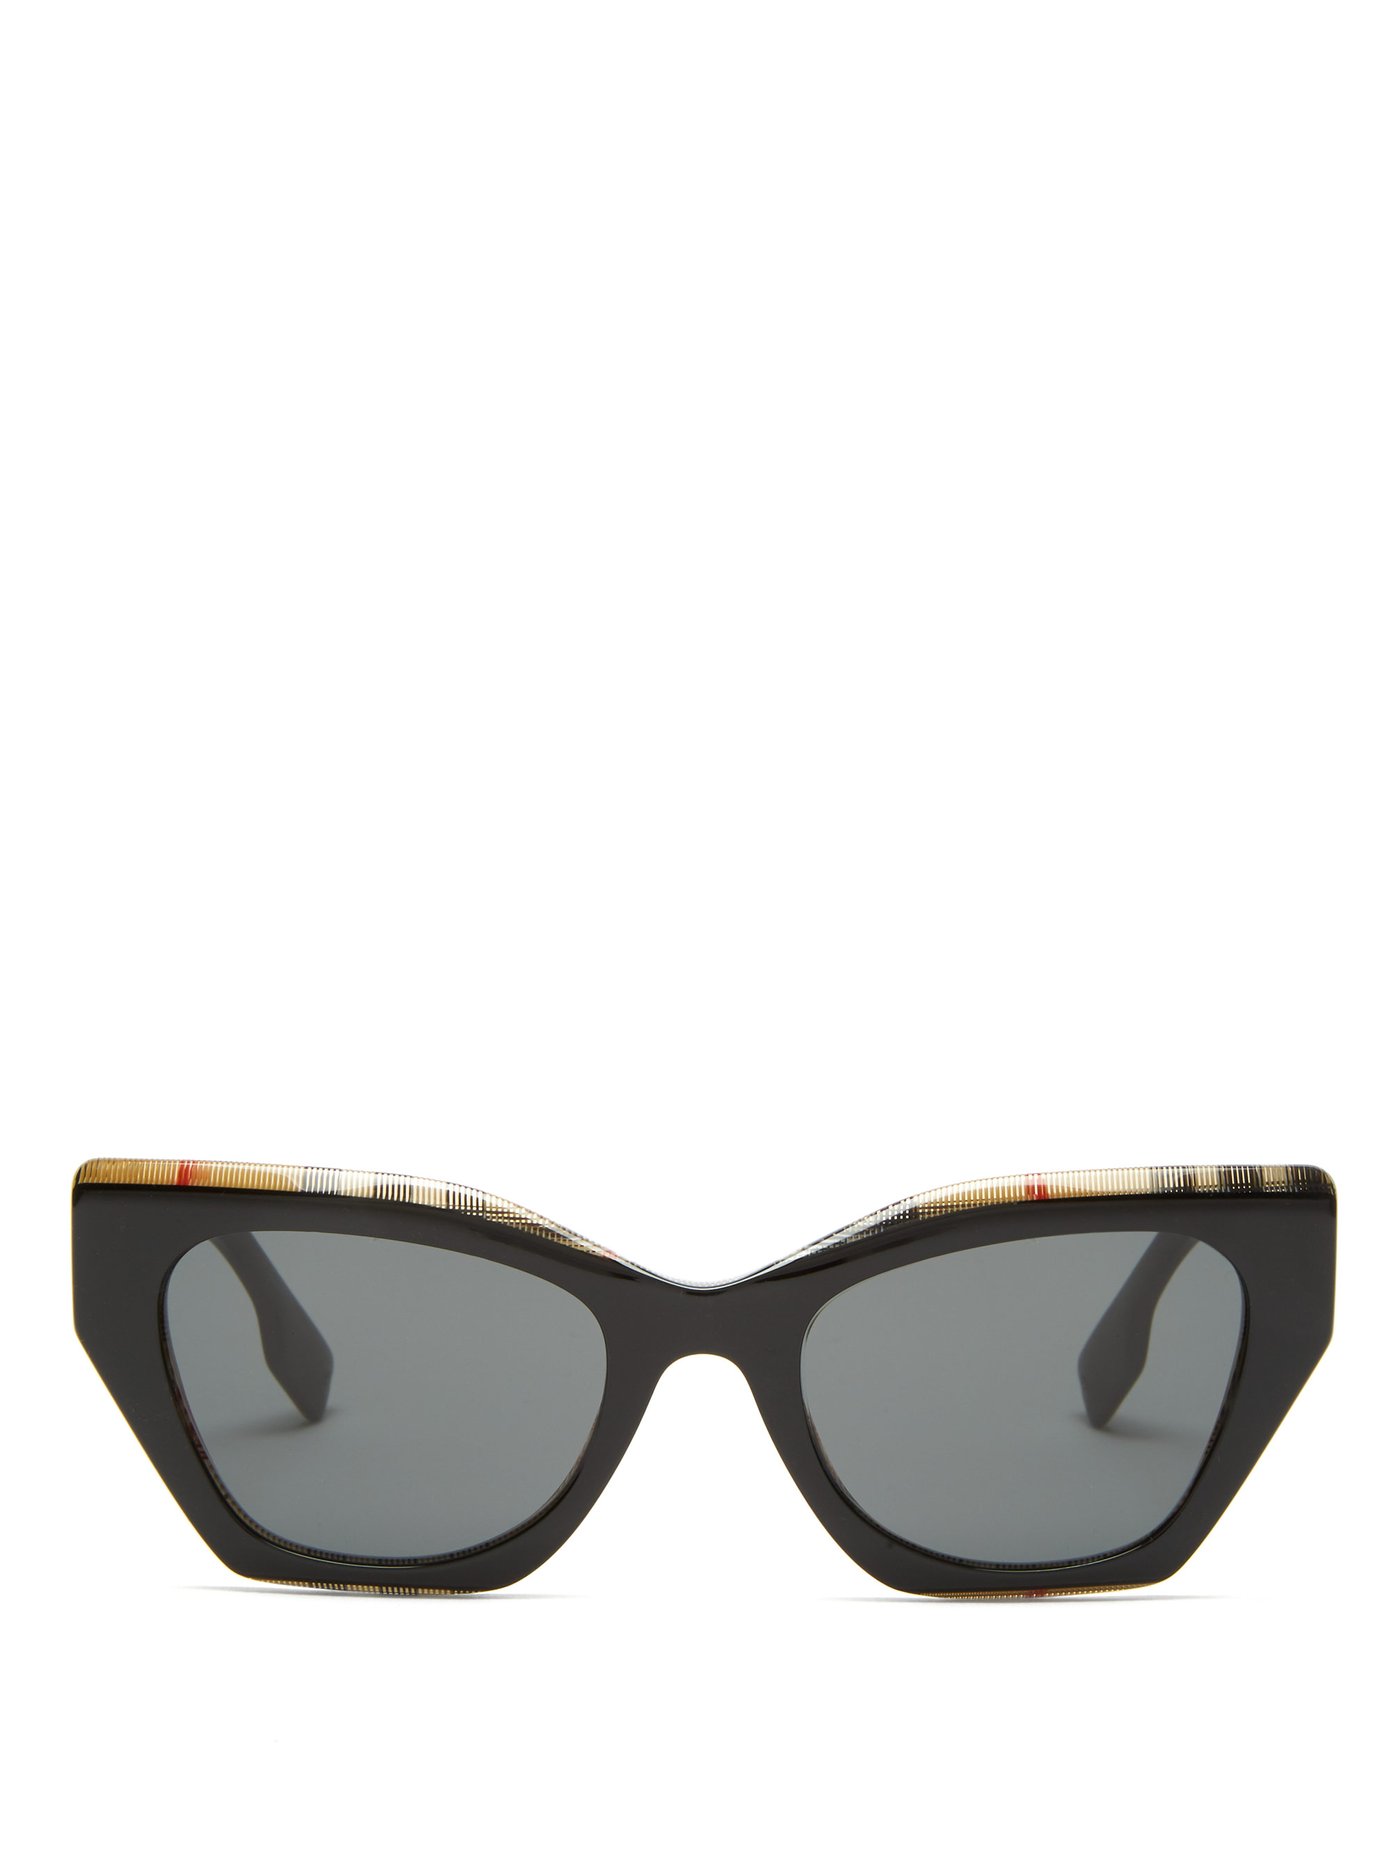 burberry cat eye sunglasses black